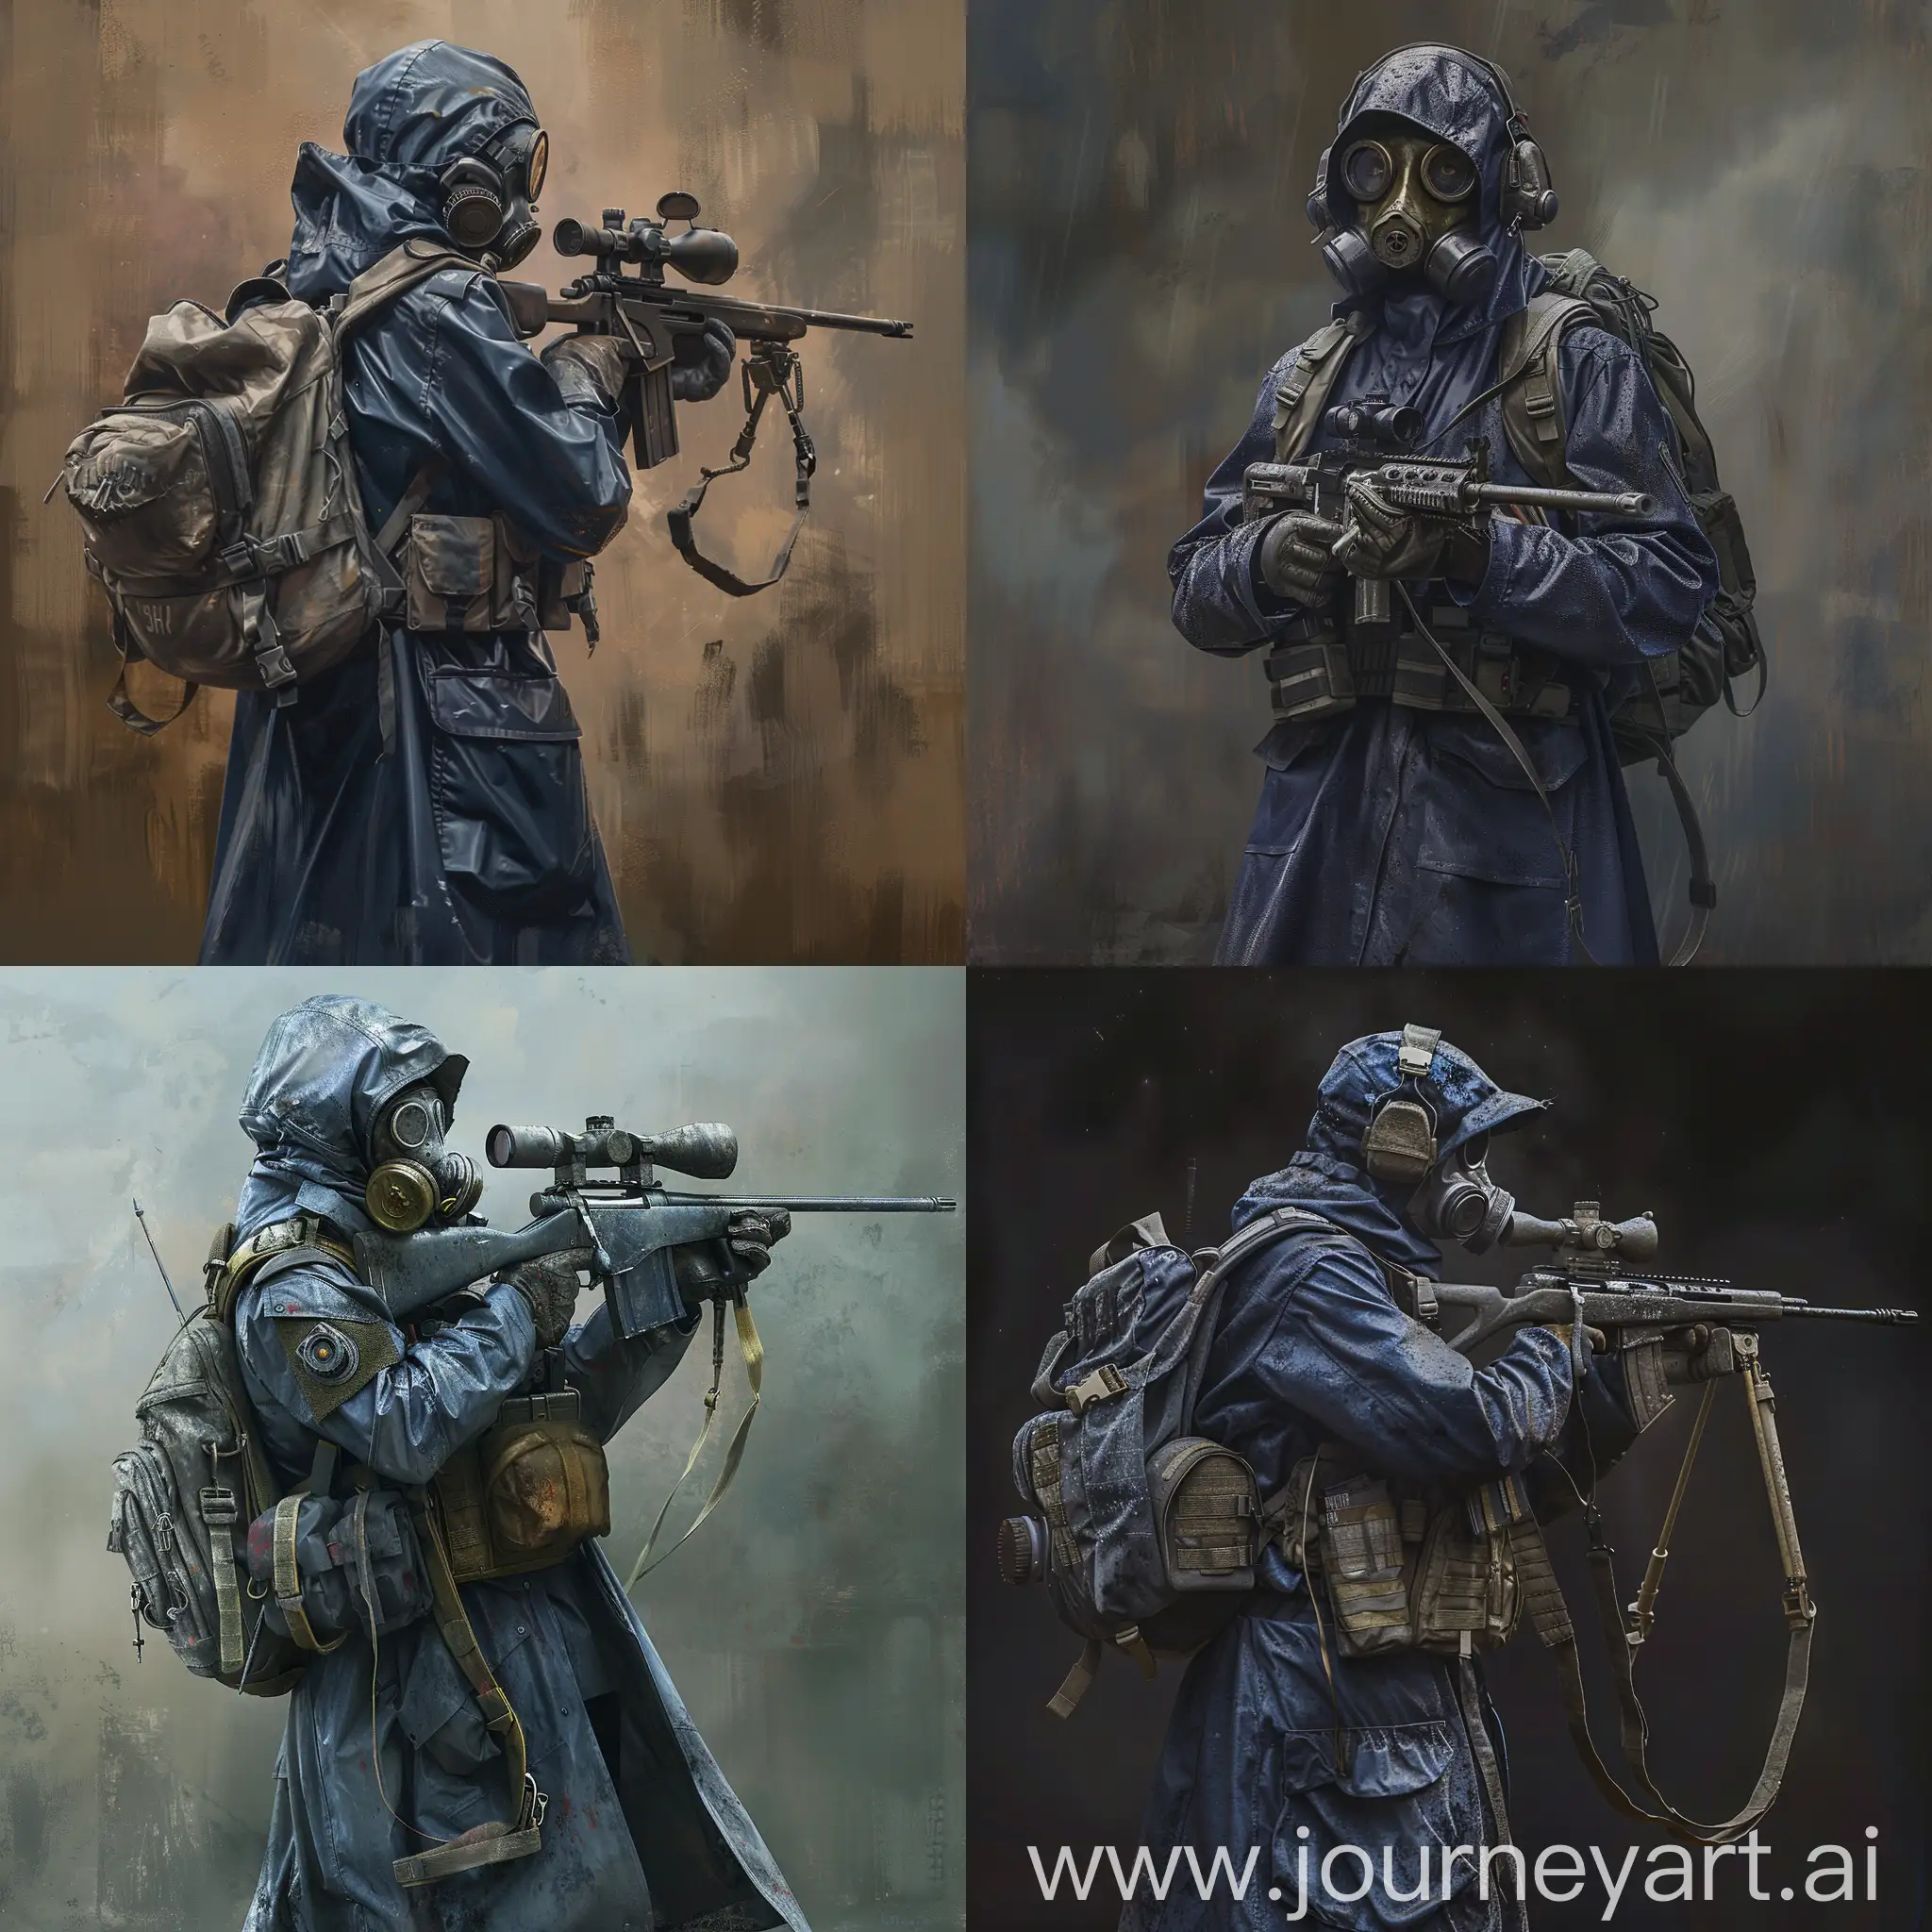 Mercenary-in-Dark-Blue-Raincoat-Navigating-Anomalies-in-Chernobyl-Exclusion-Zone